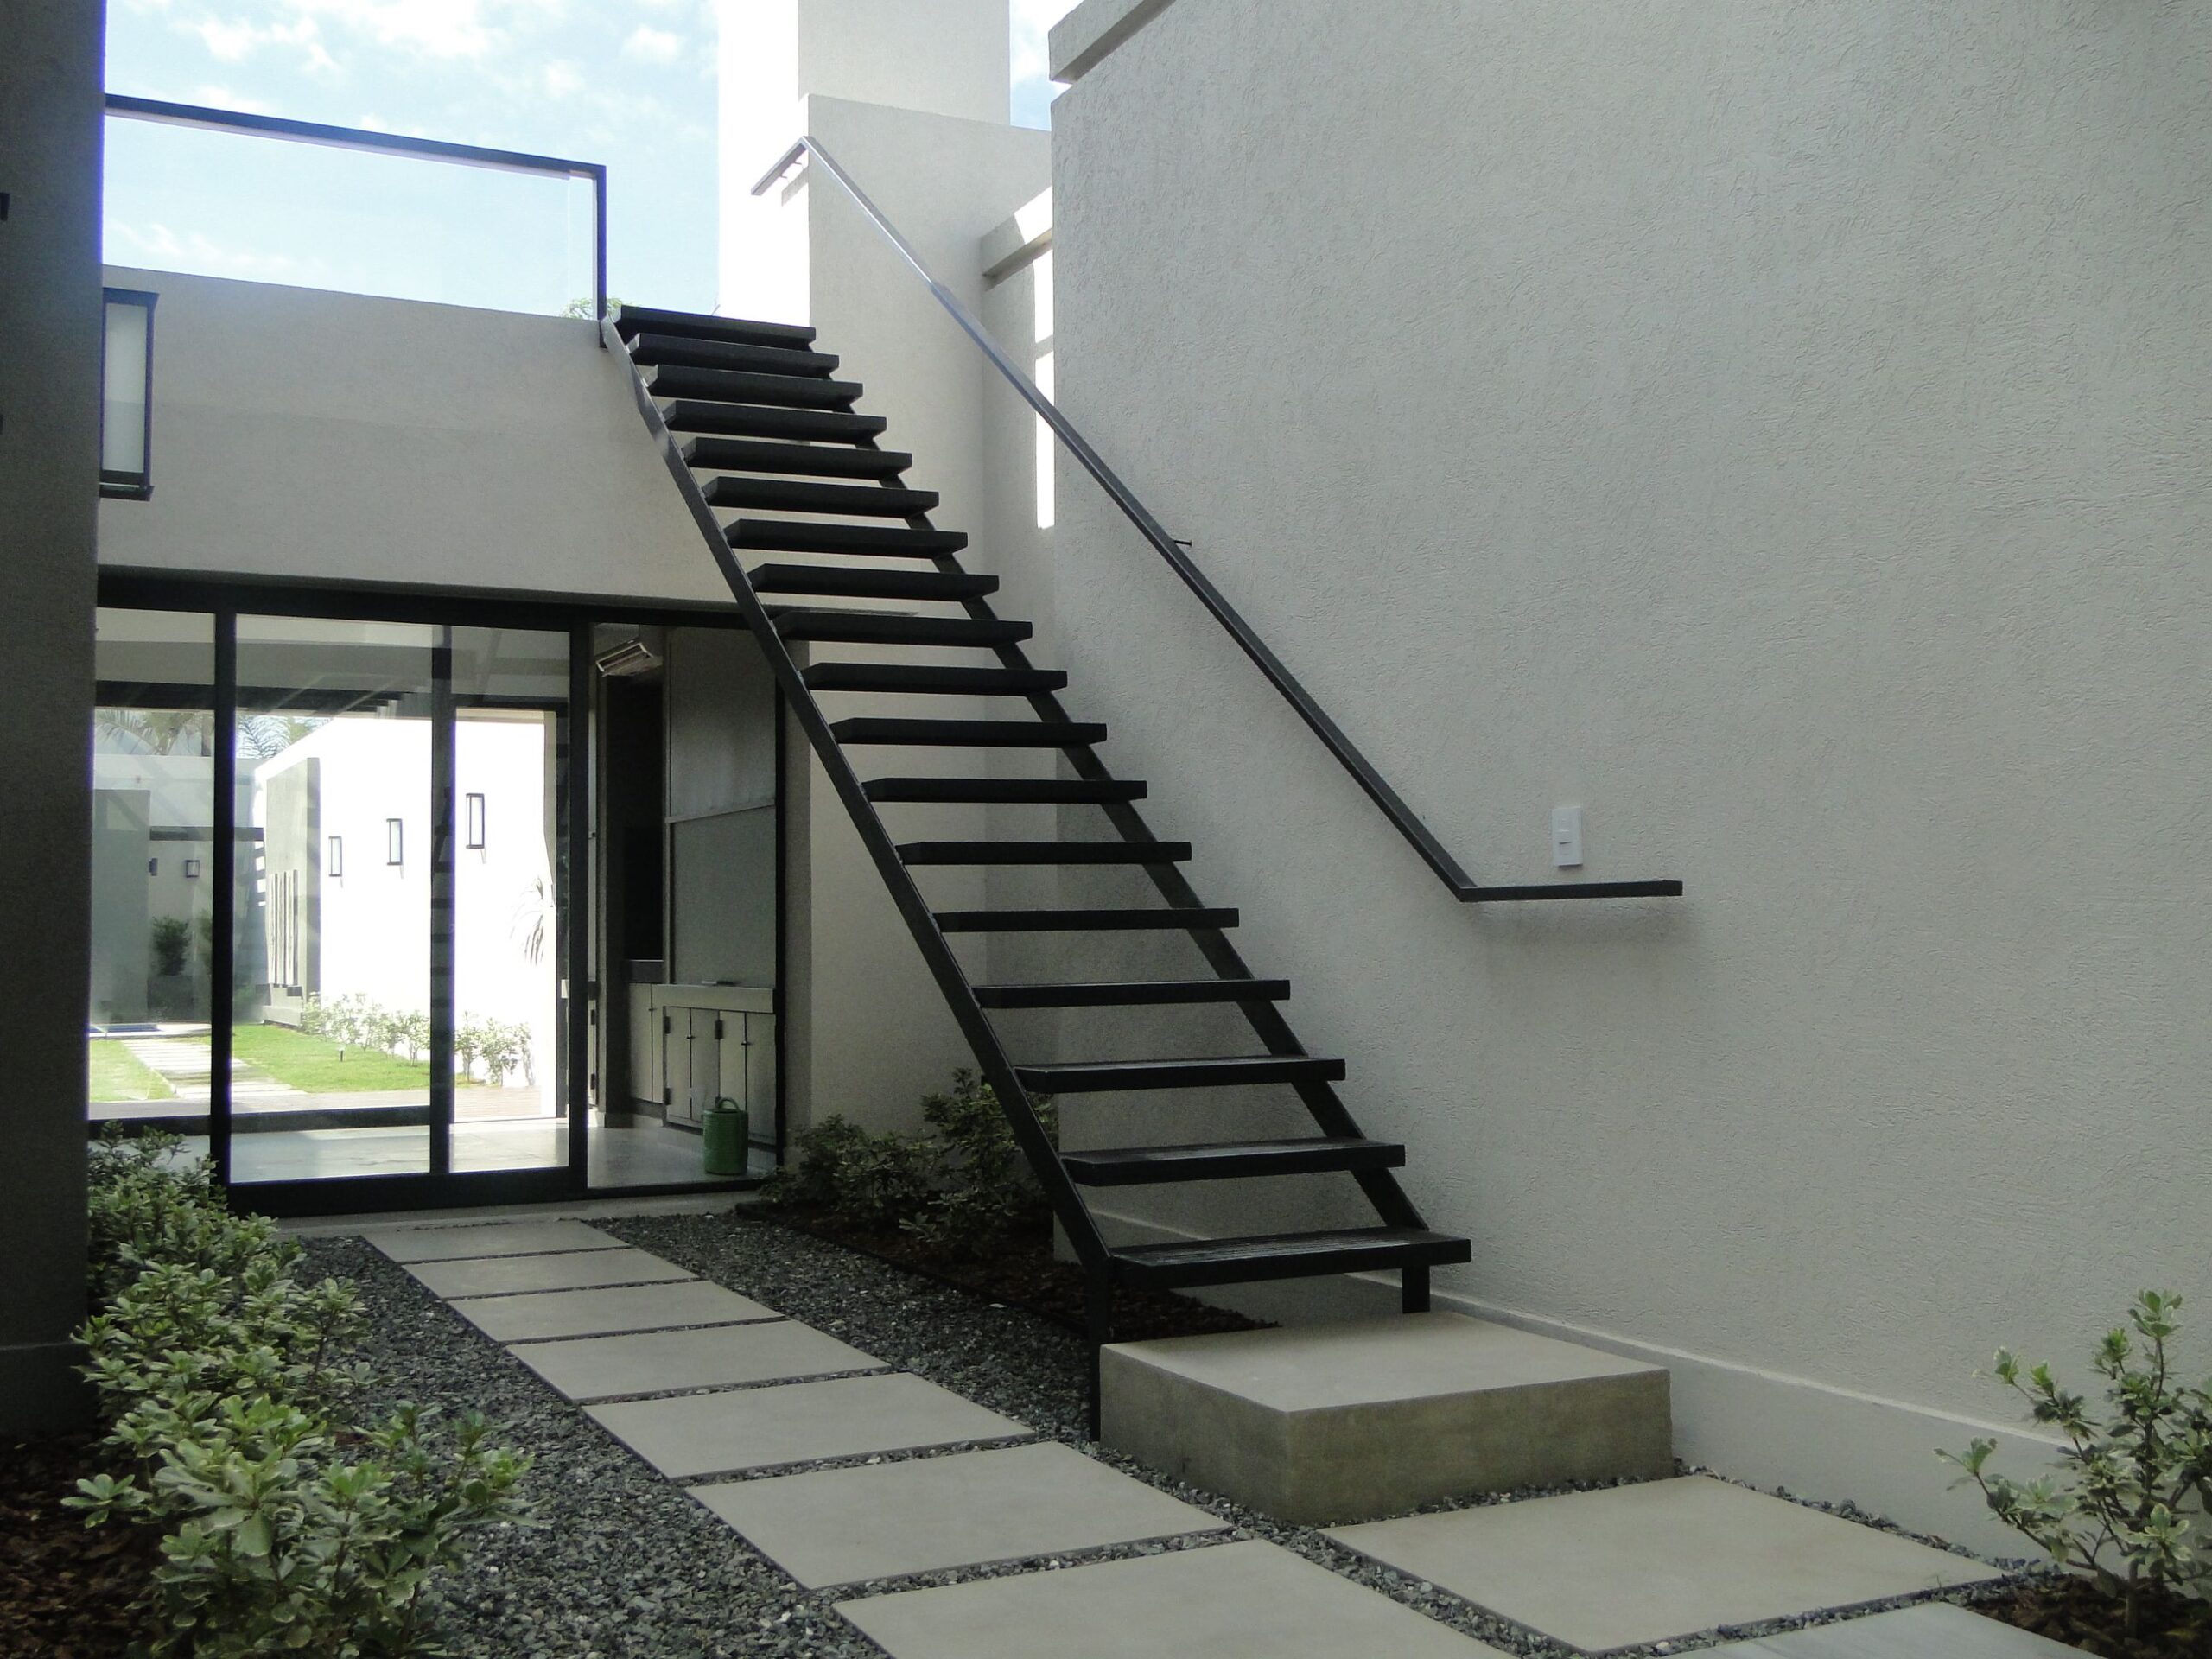 Escalera de hierro exterior para terraza: ¿Cuál debería comprar?